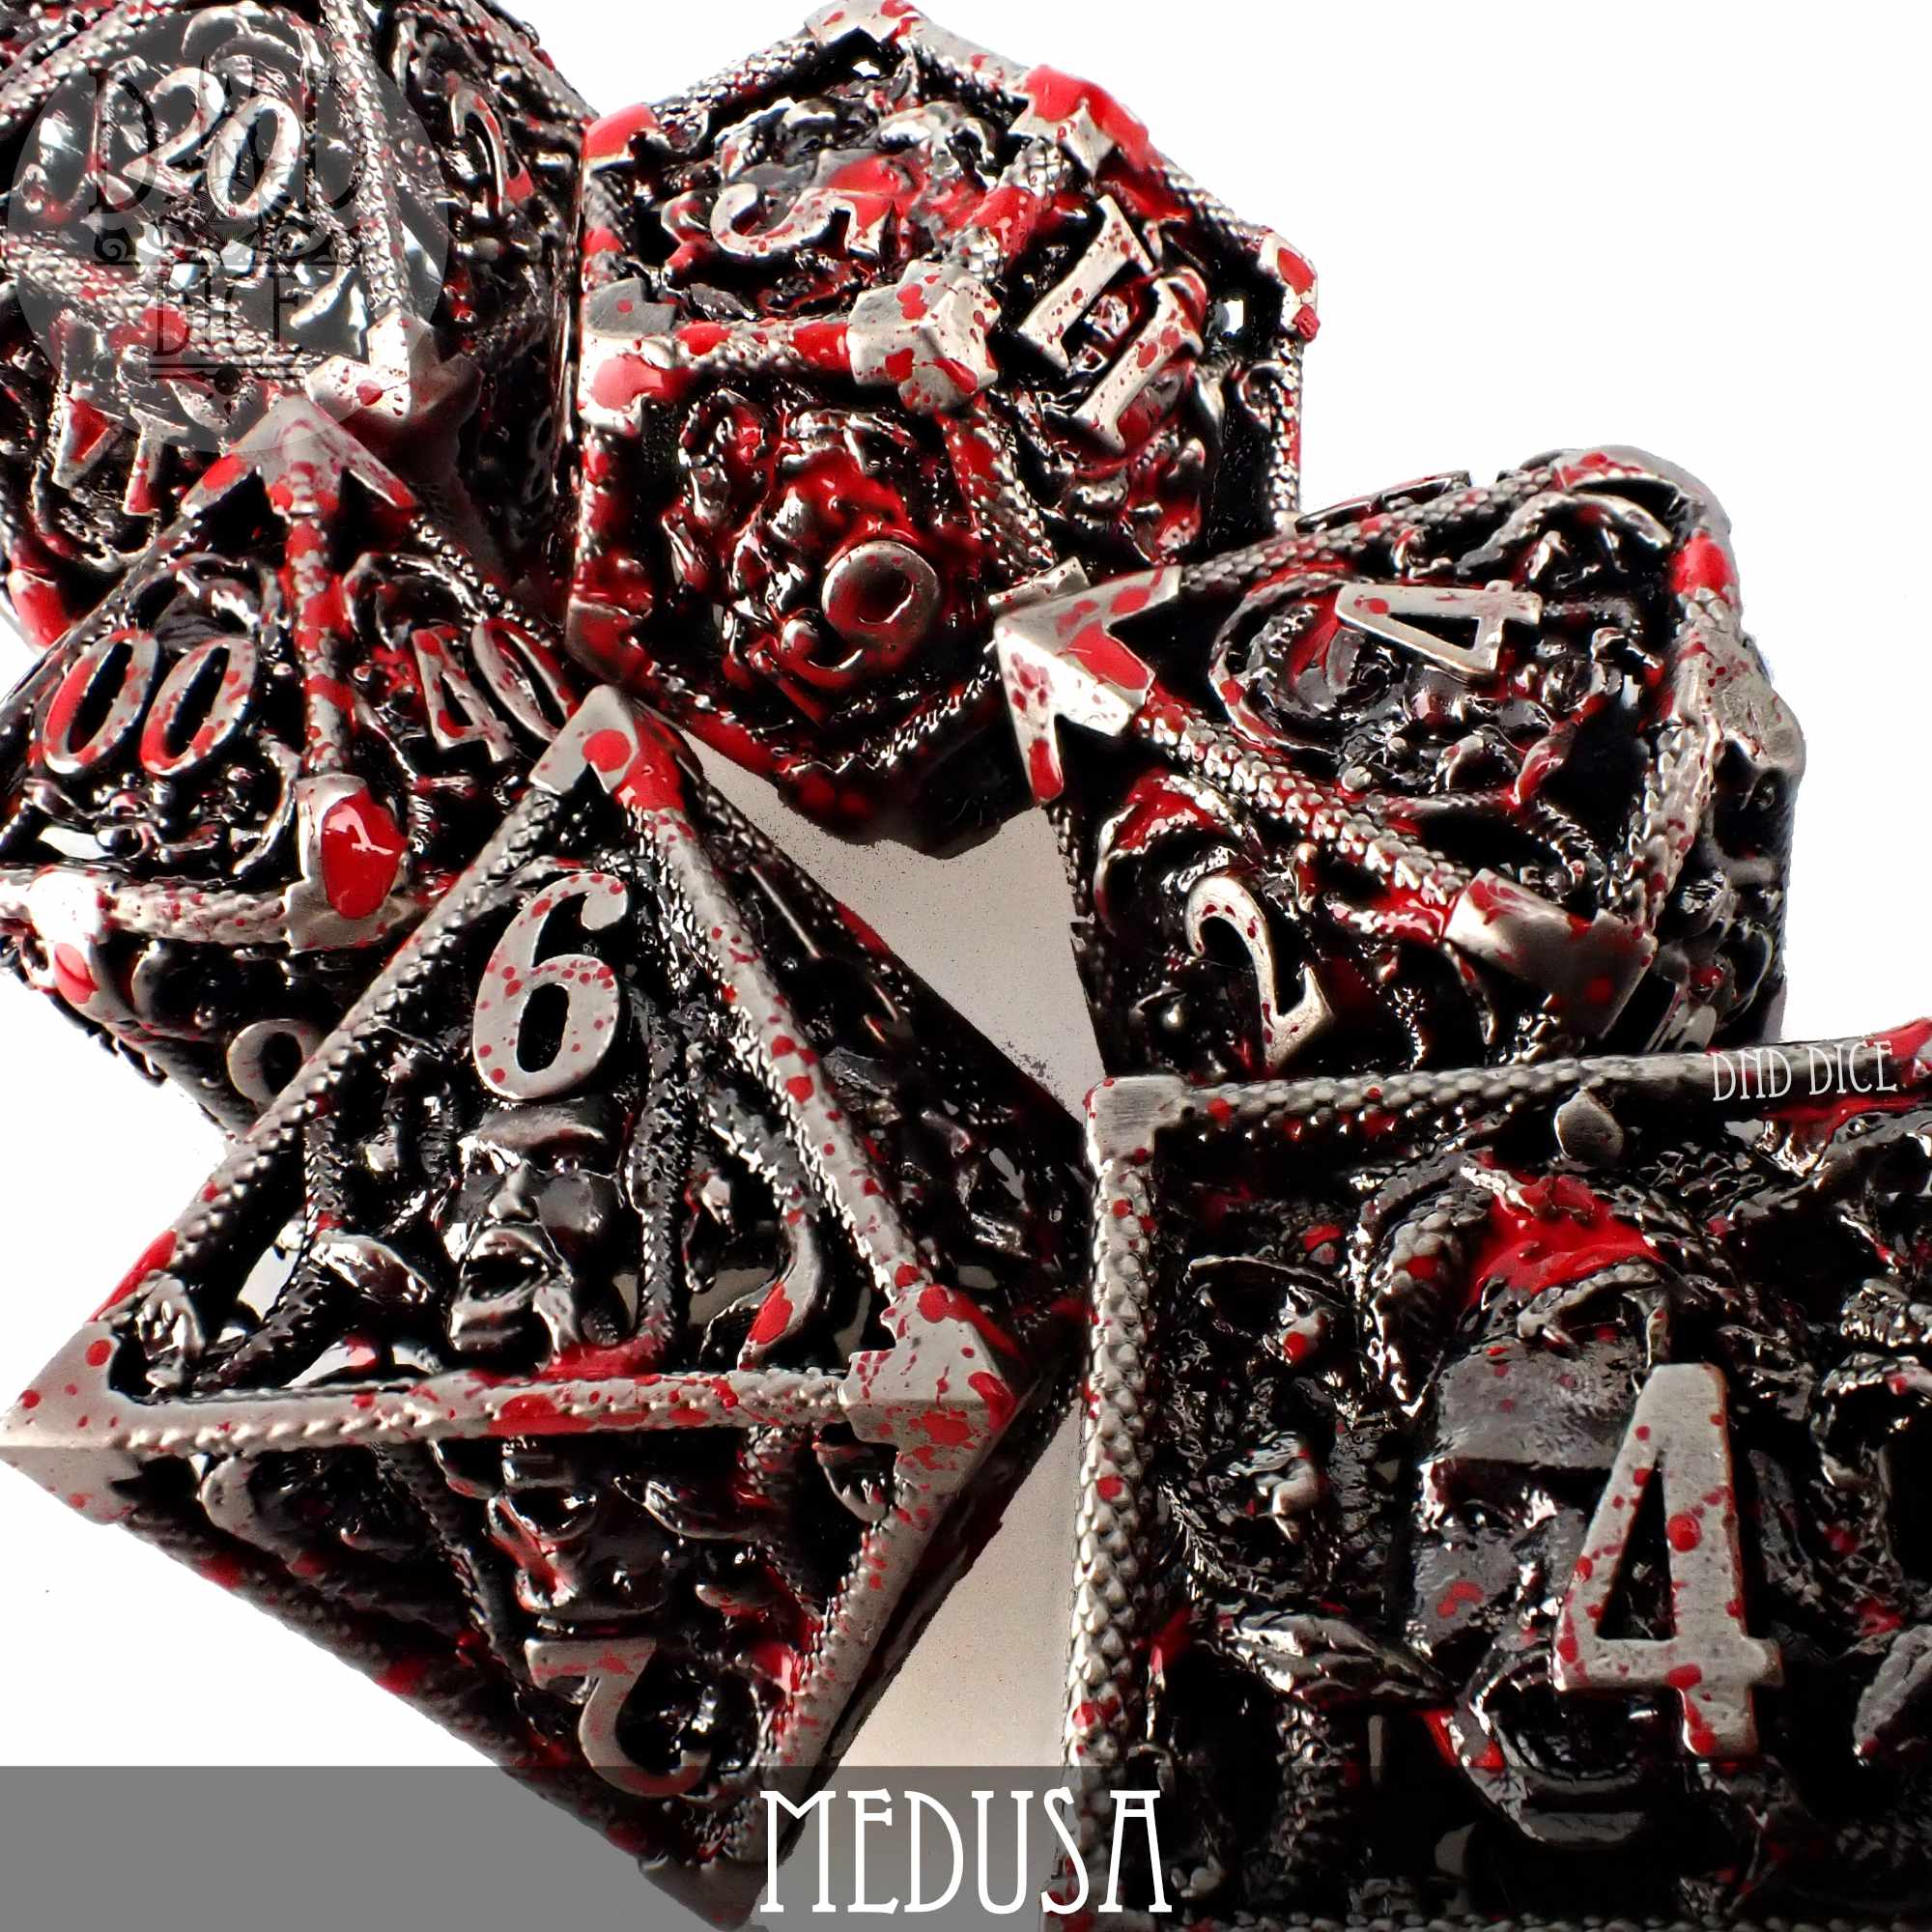 Medusa Hollow Metal Dice Set (Gift Box)